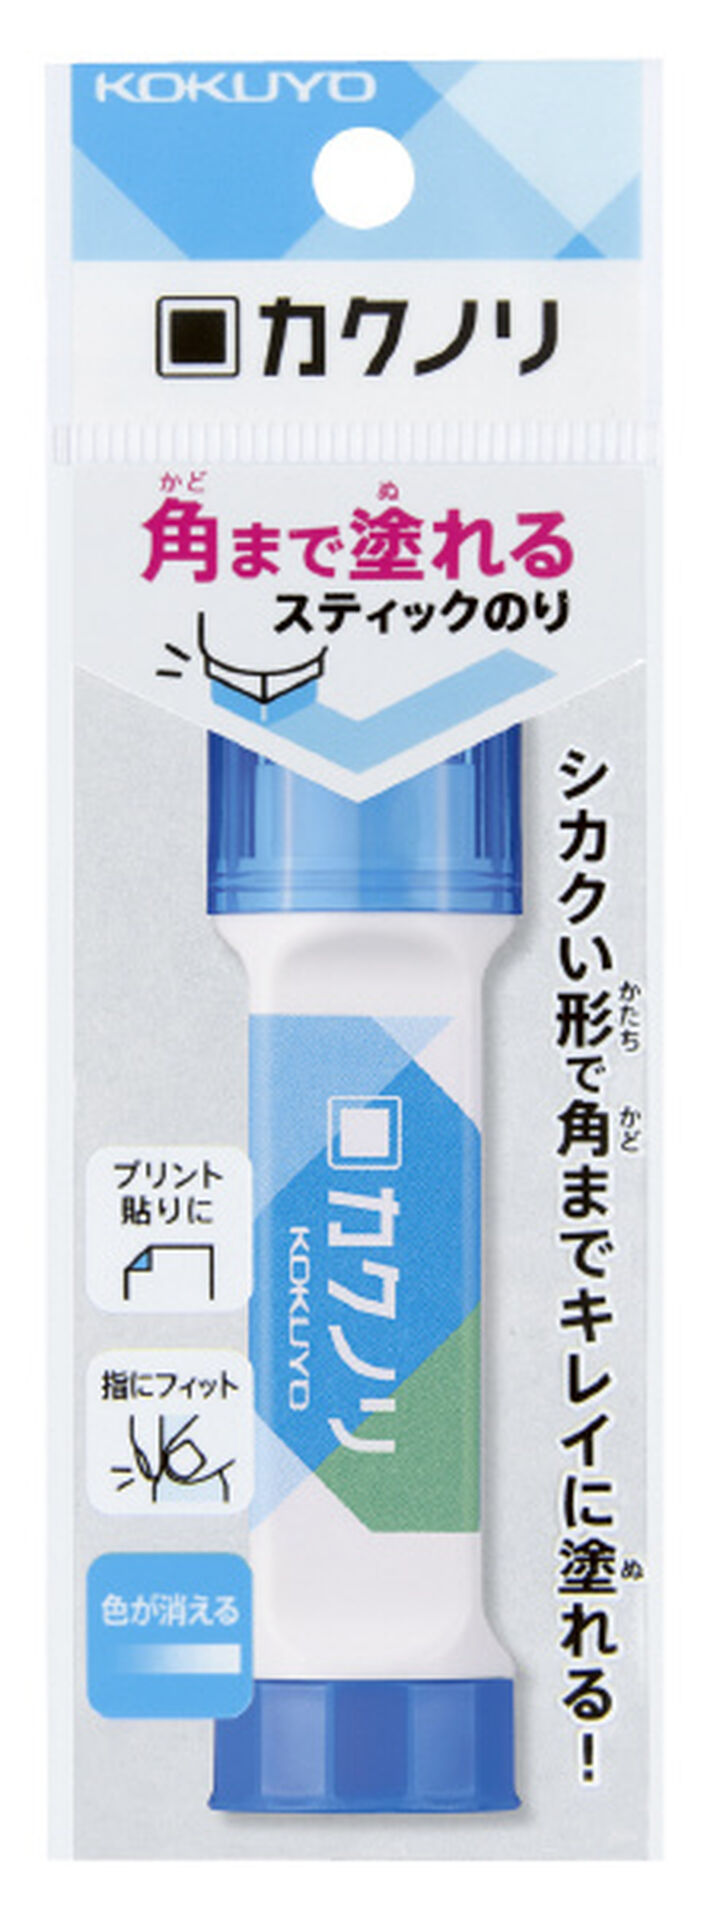 Stick Glue KAKUNORI 8g Blue,Blue, medium